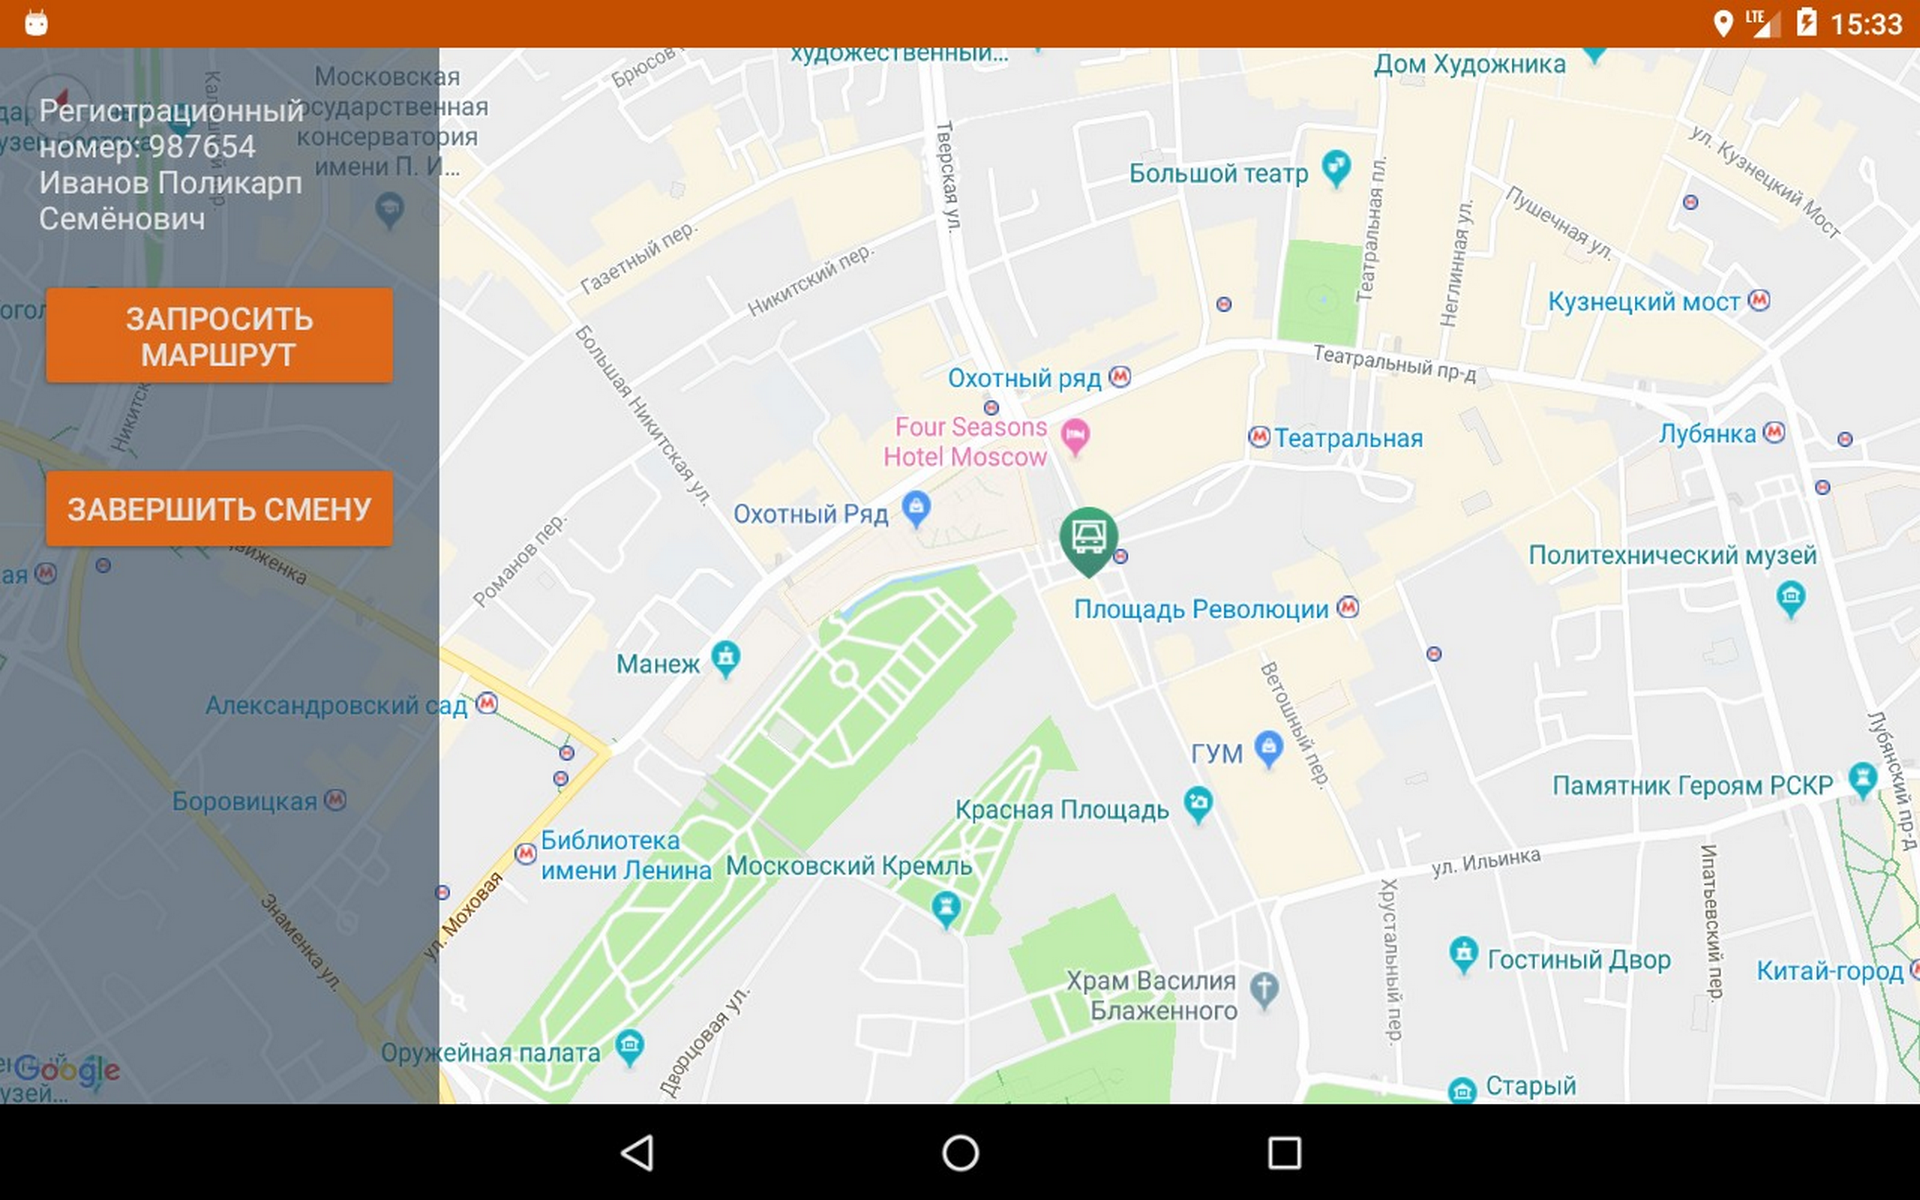 Driver app. Map